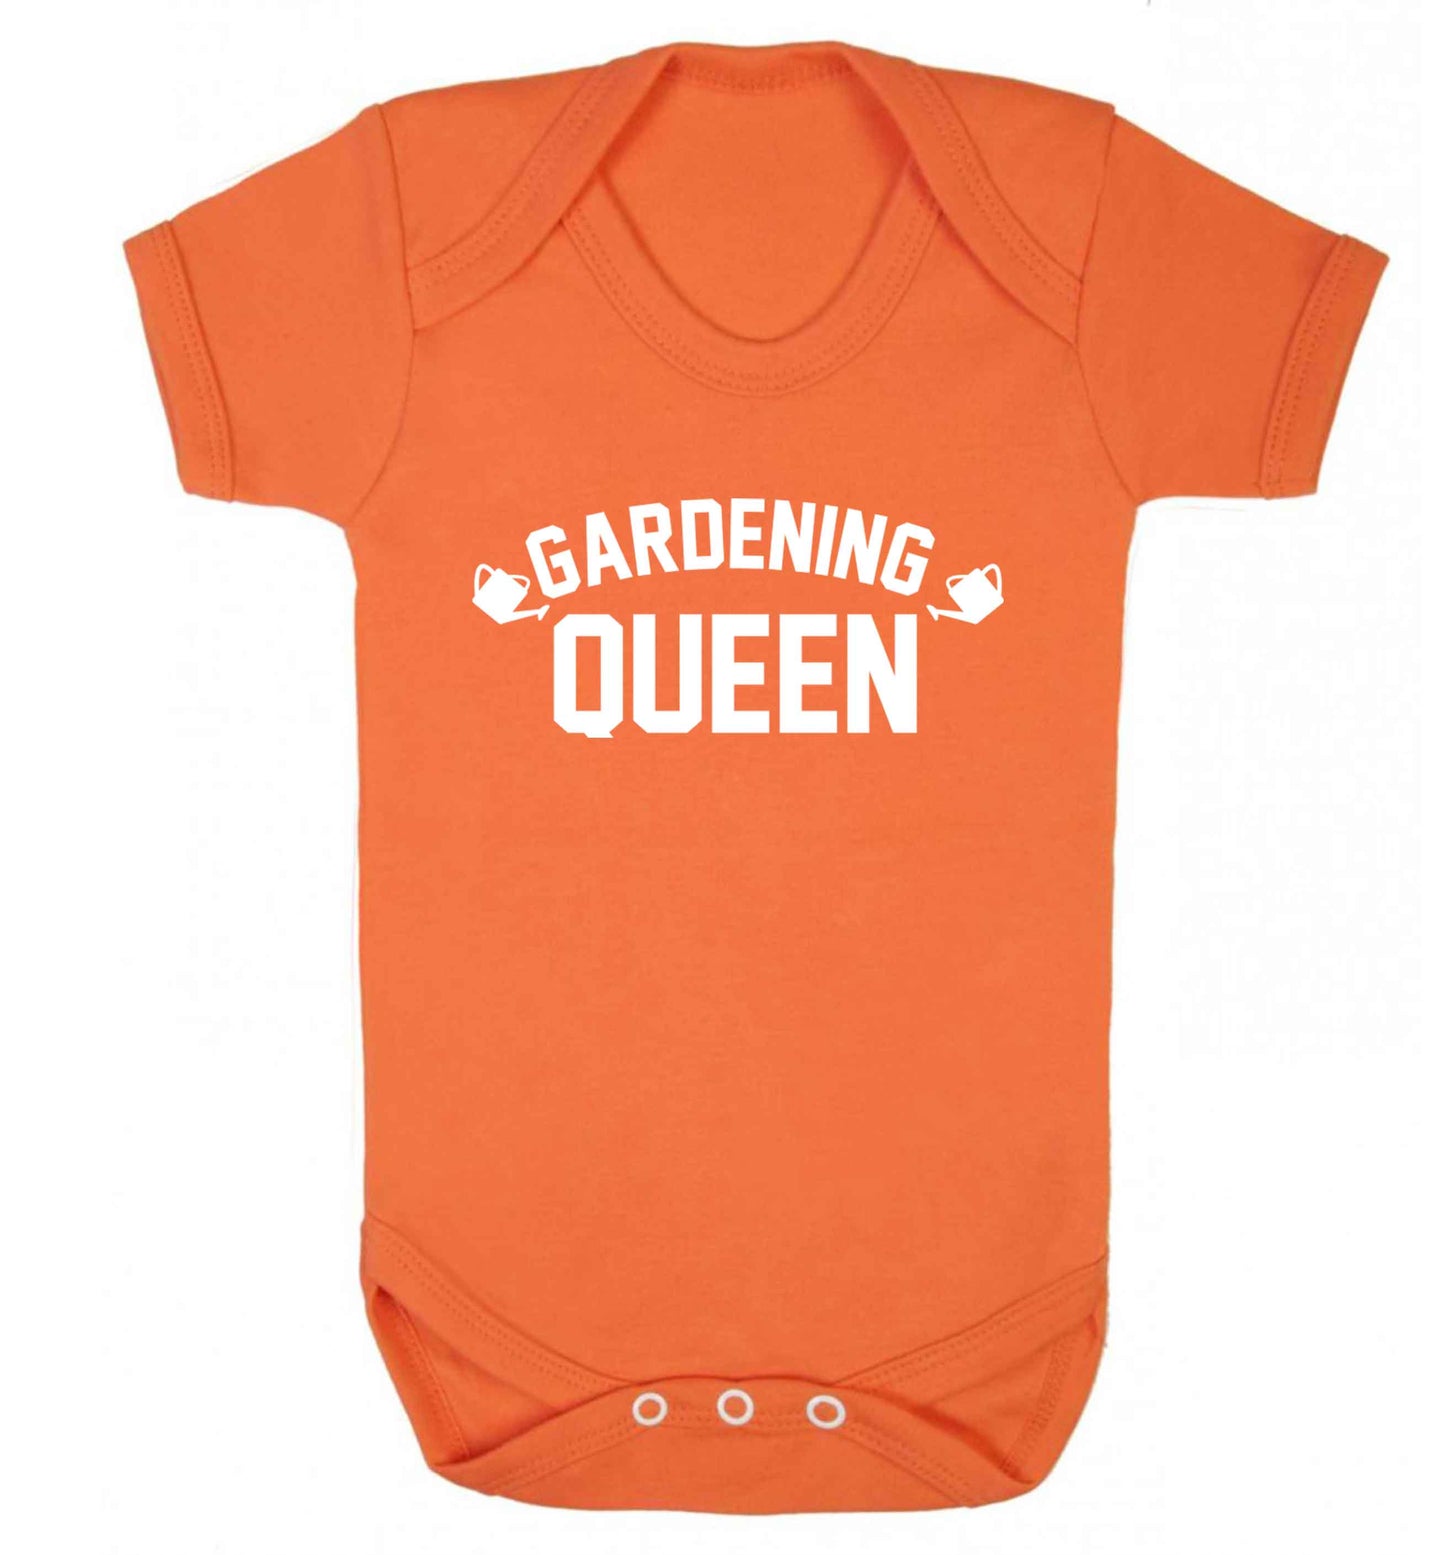 Gardening queen Baby Vest orange 18-24 months